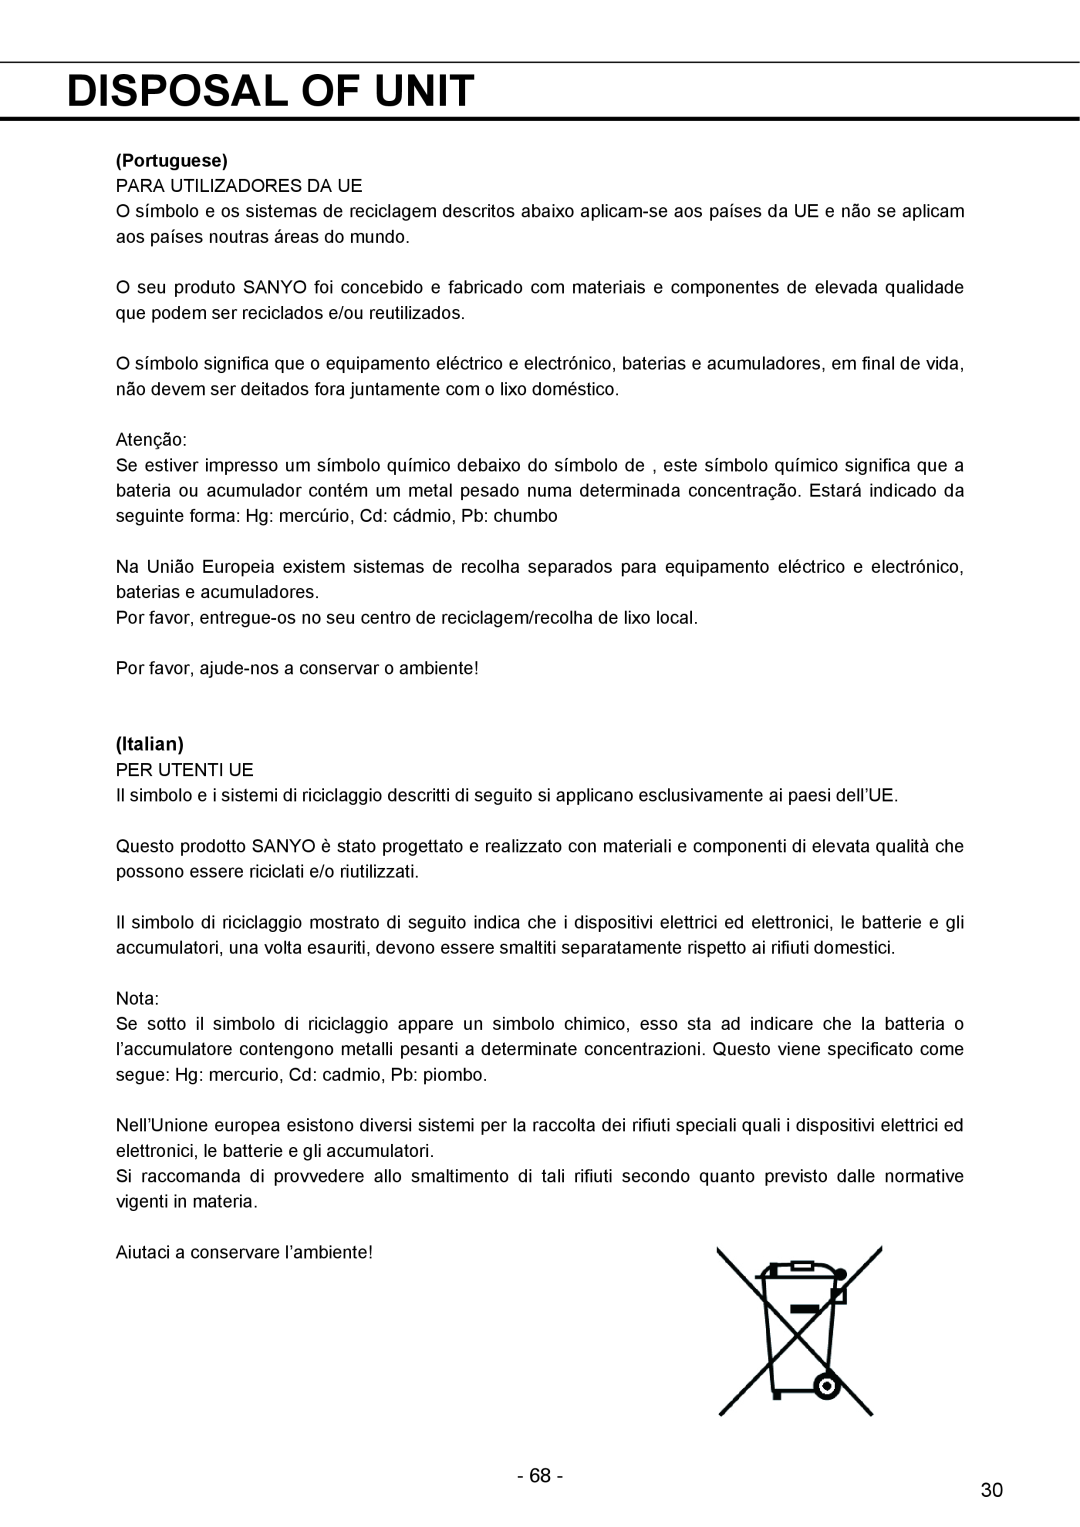 Sanyo MPR-1411R instruction manual Disposal Of Unit, Italian, Portuguese 